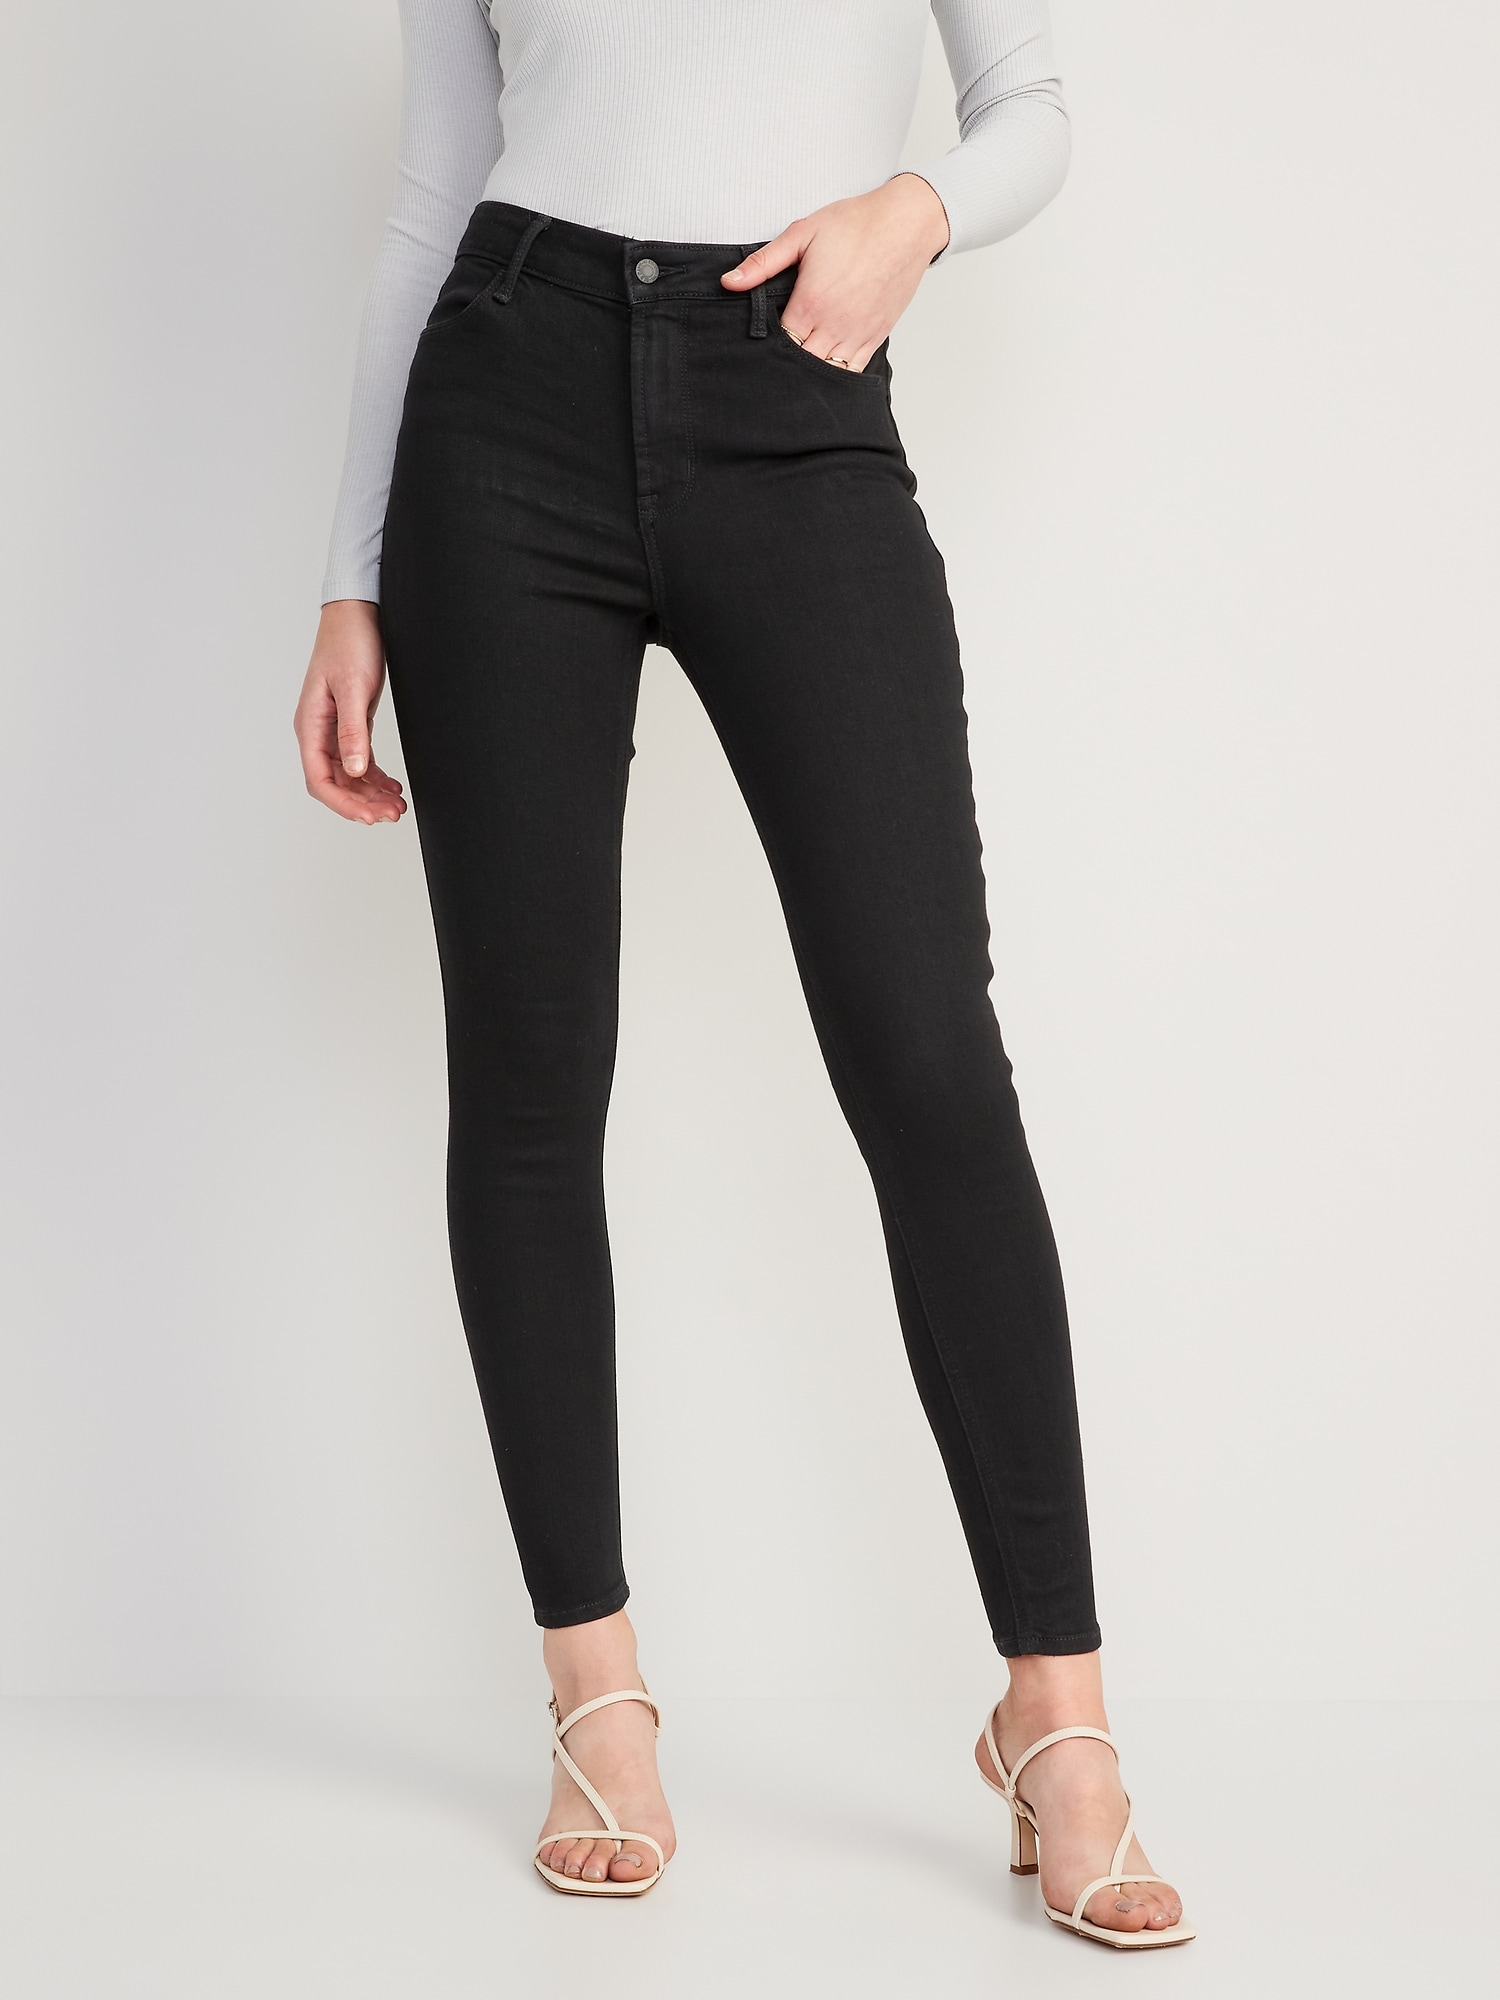 Seine High Rise Skinny Jeans 27 Inch - Black | Universal Standard